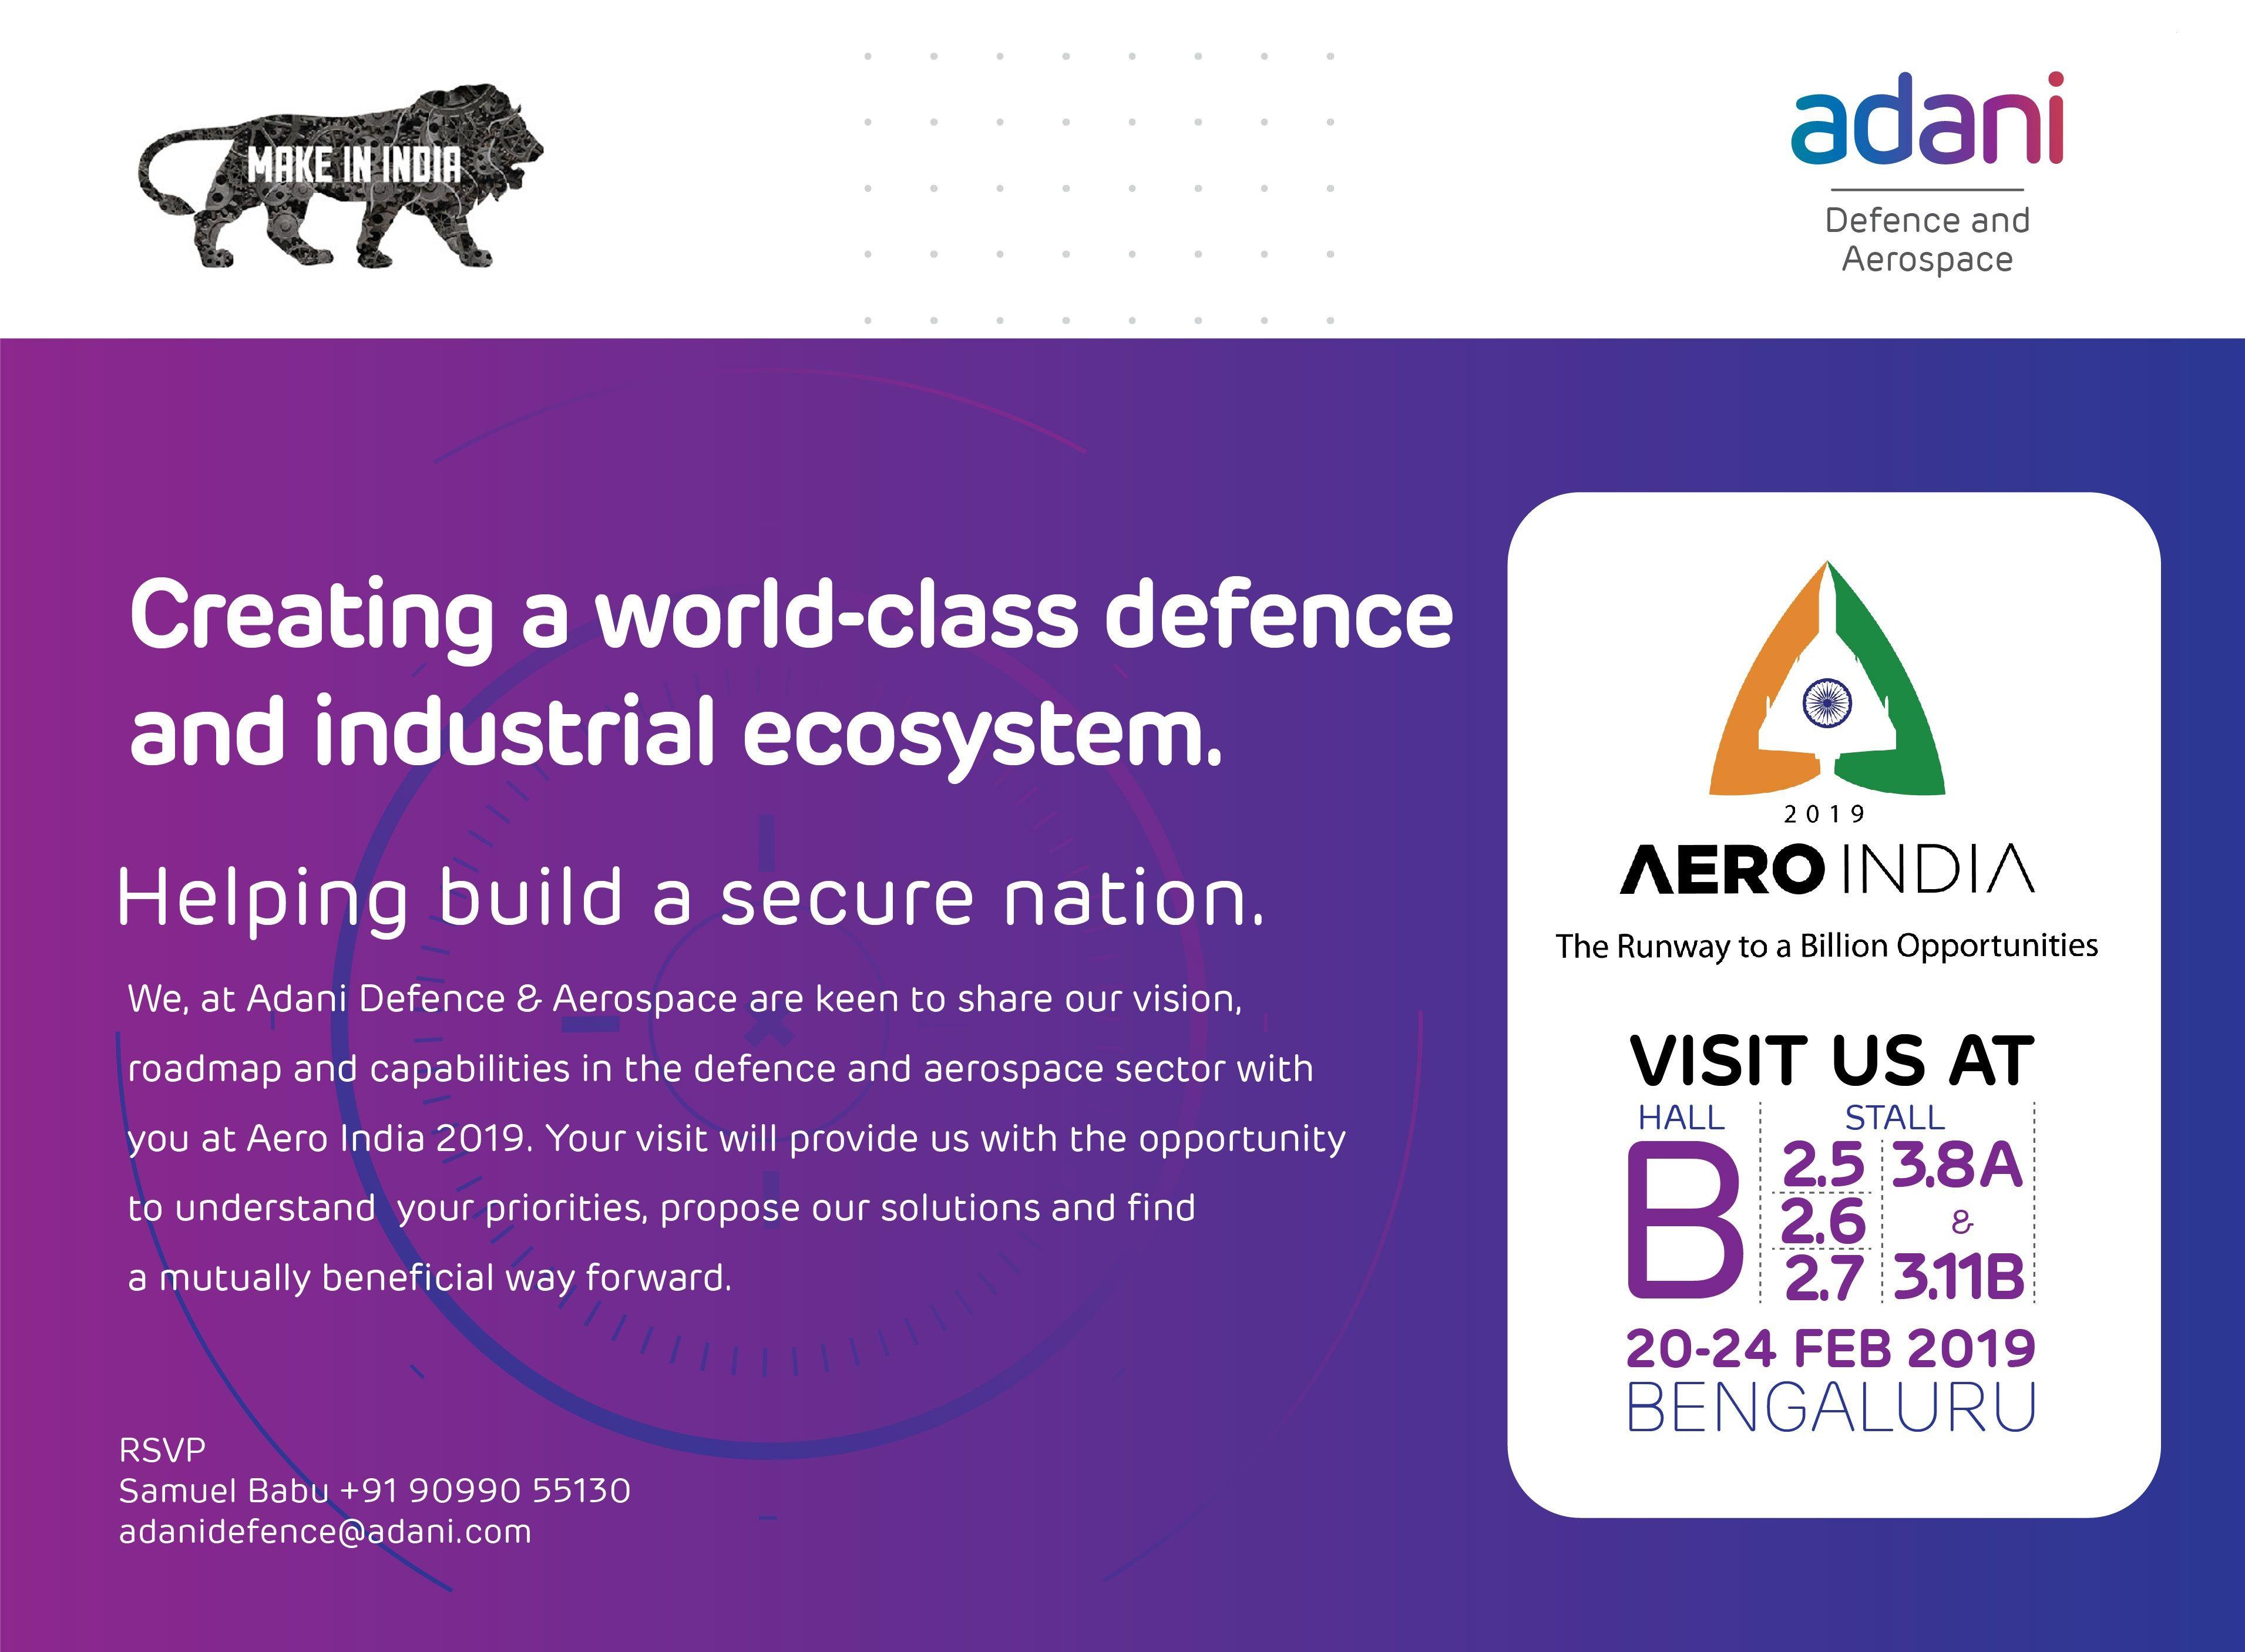 Aerospace and Defense Company Logo - Aerospace and Defence Manufacturing Companies in India - Adani ...